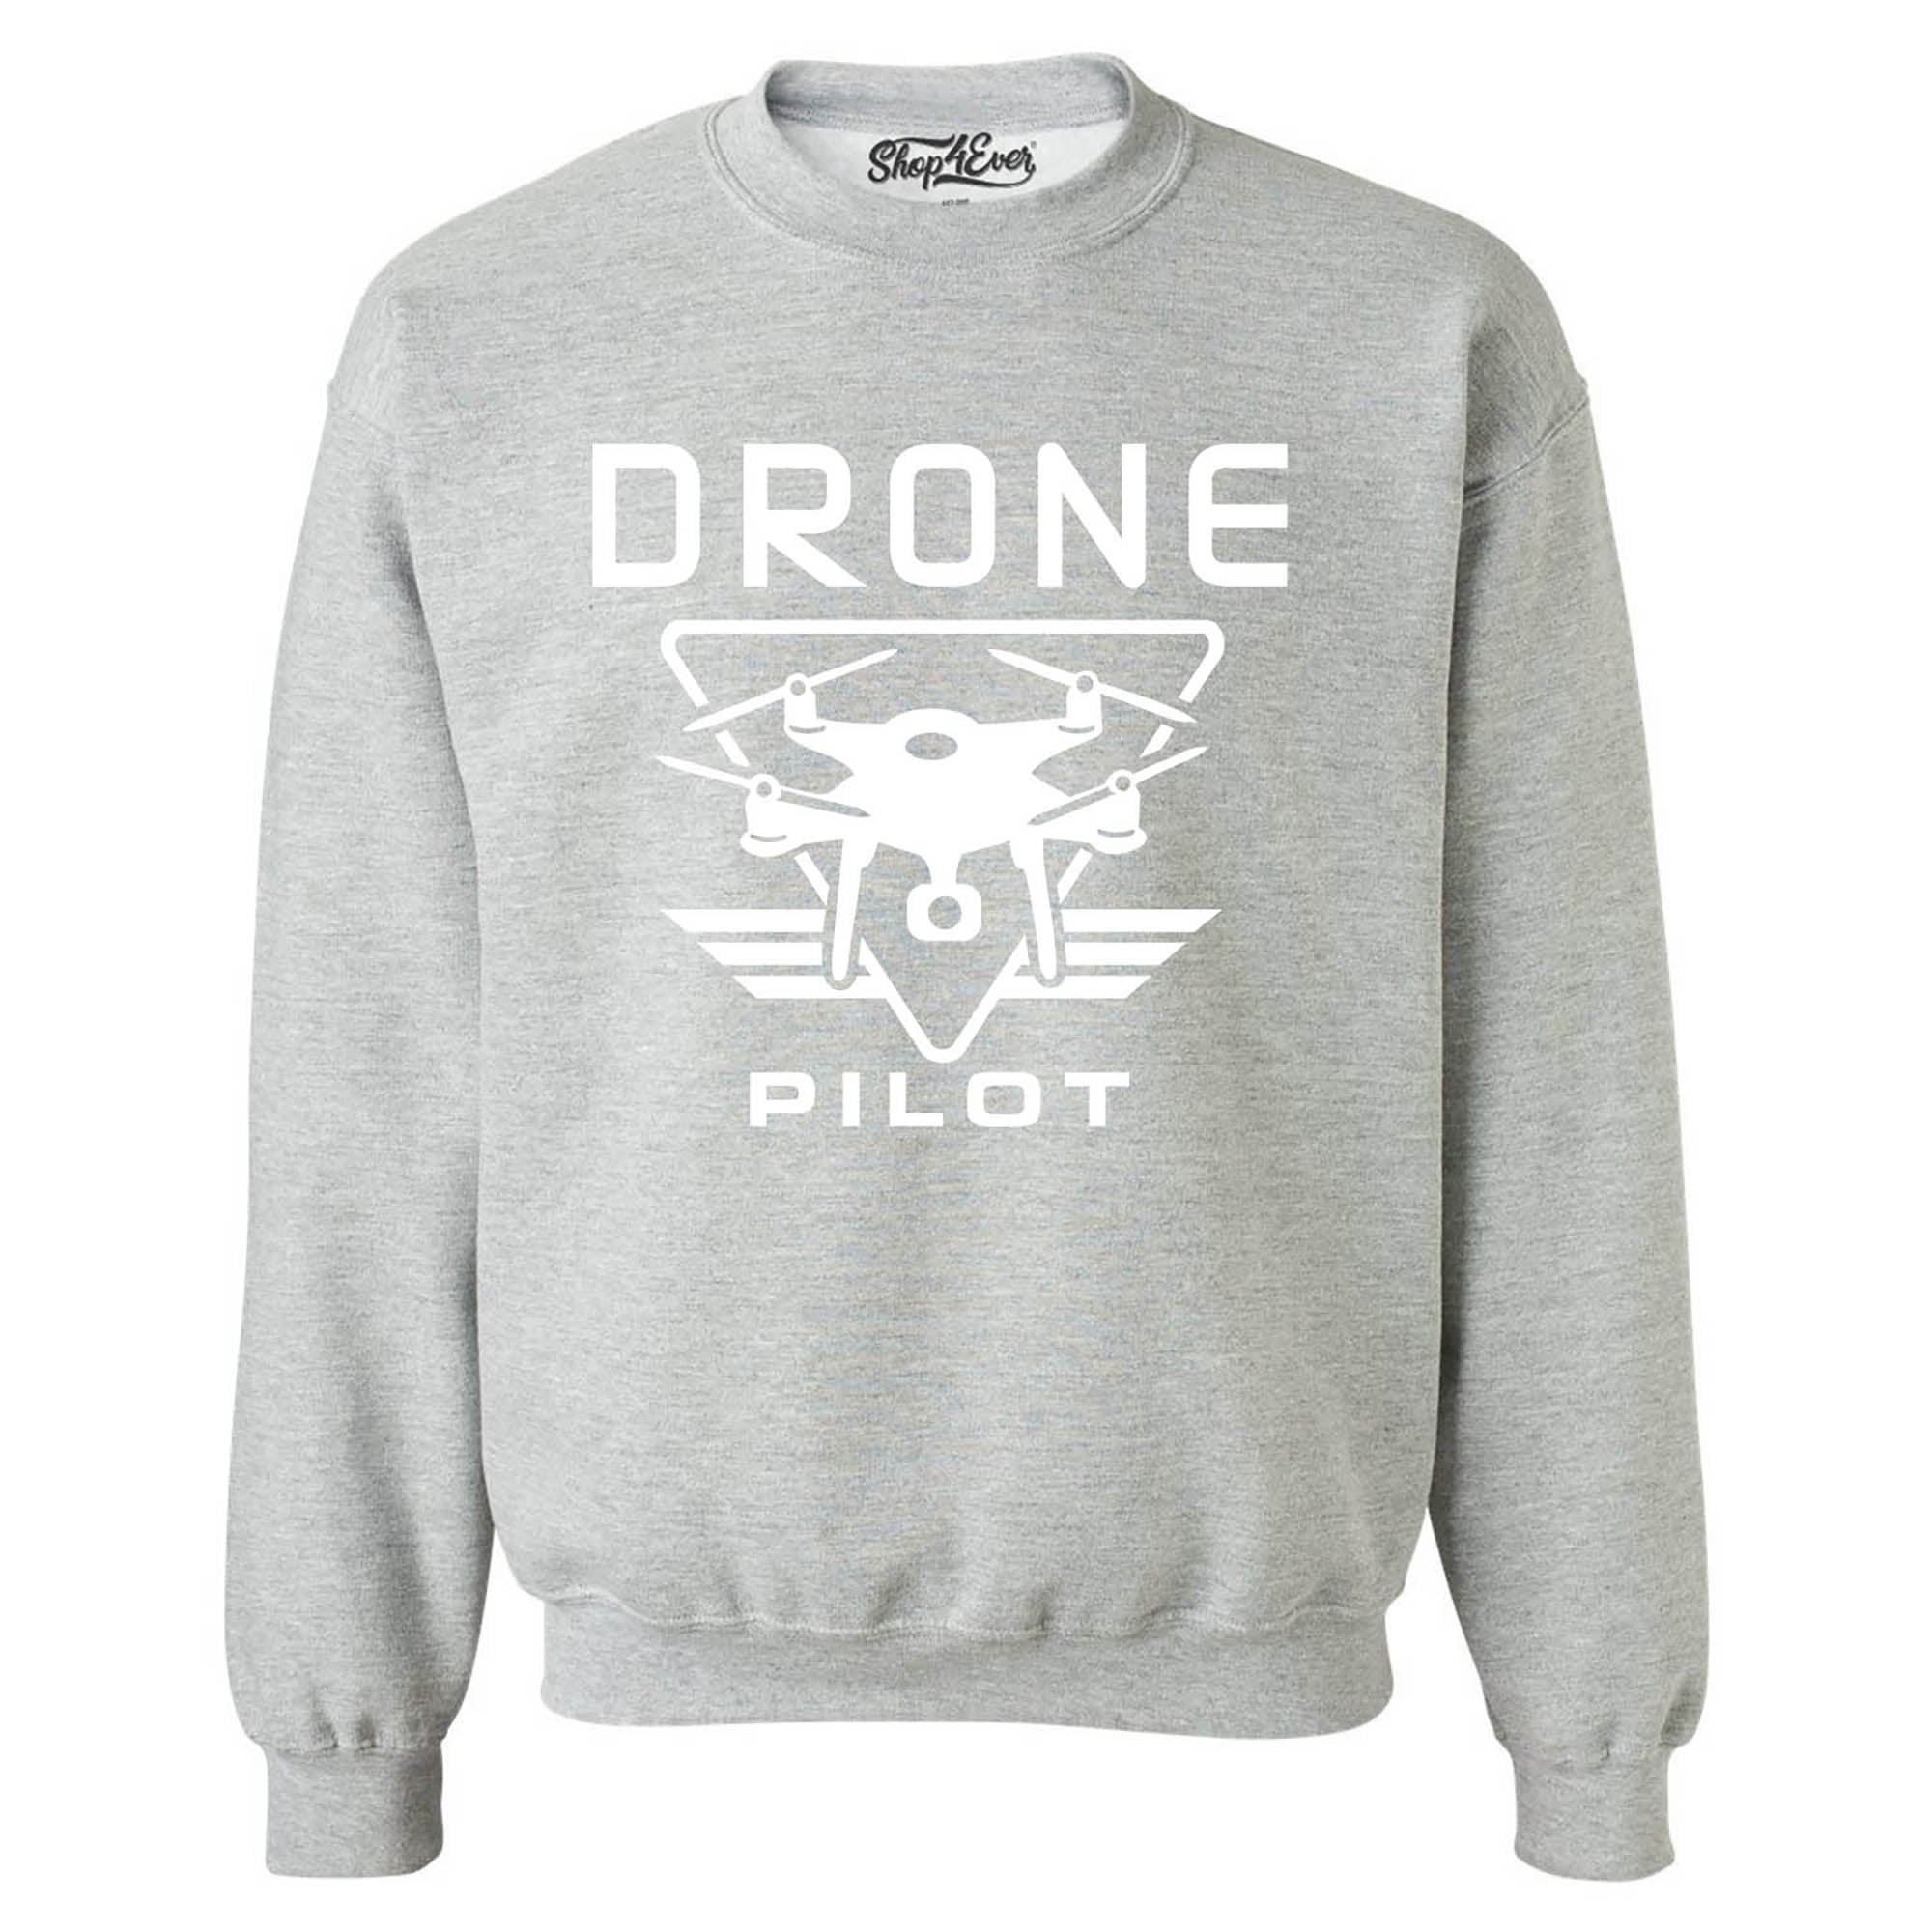 Drone Pilot Crewneck Sweatshirts